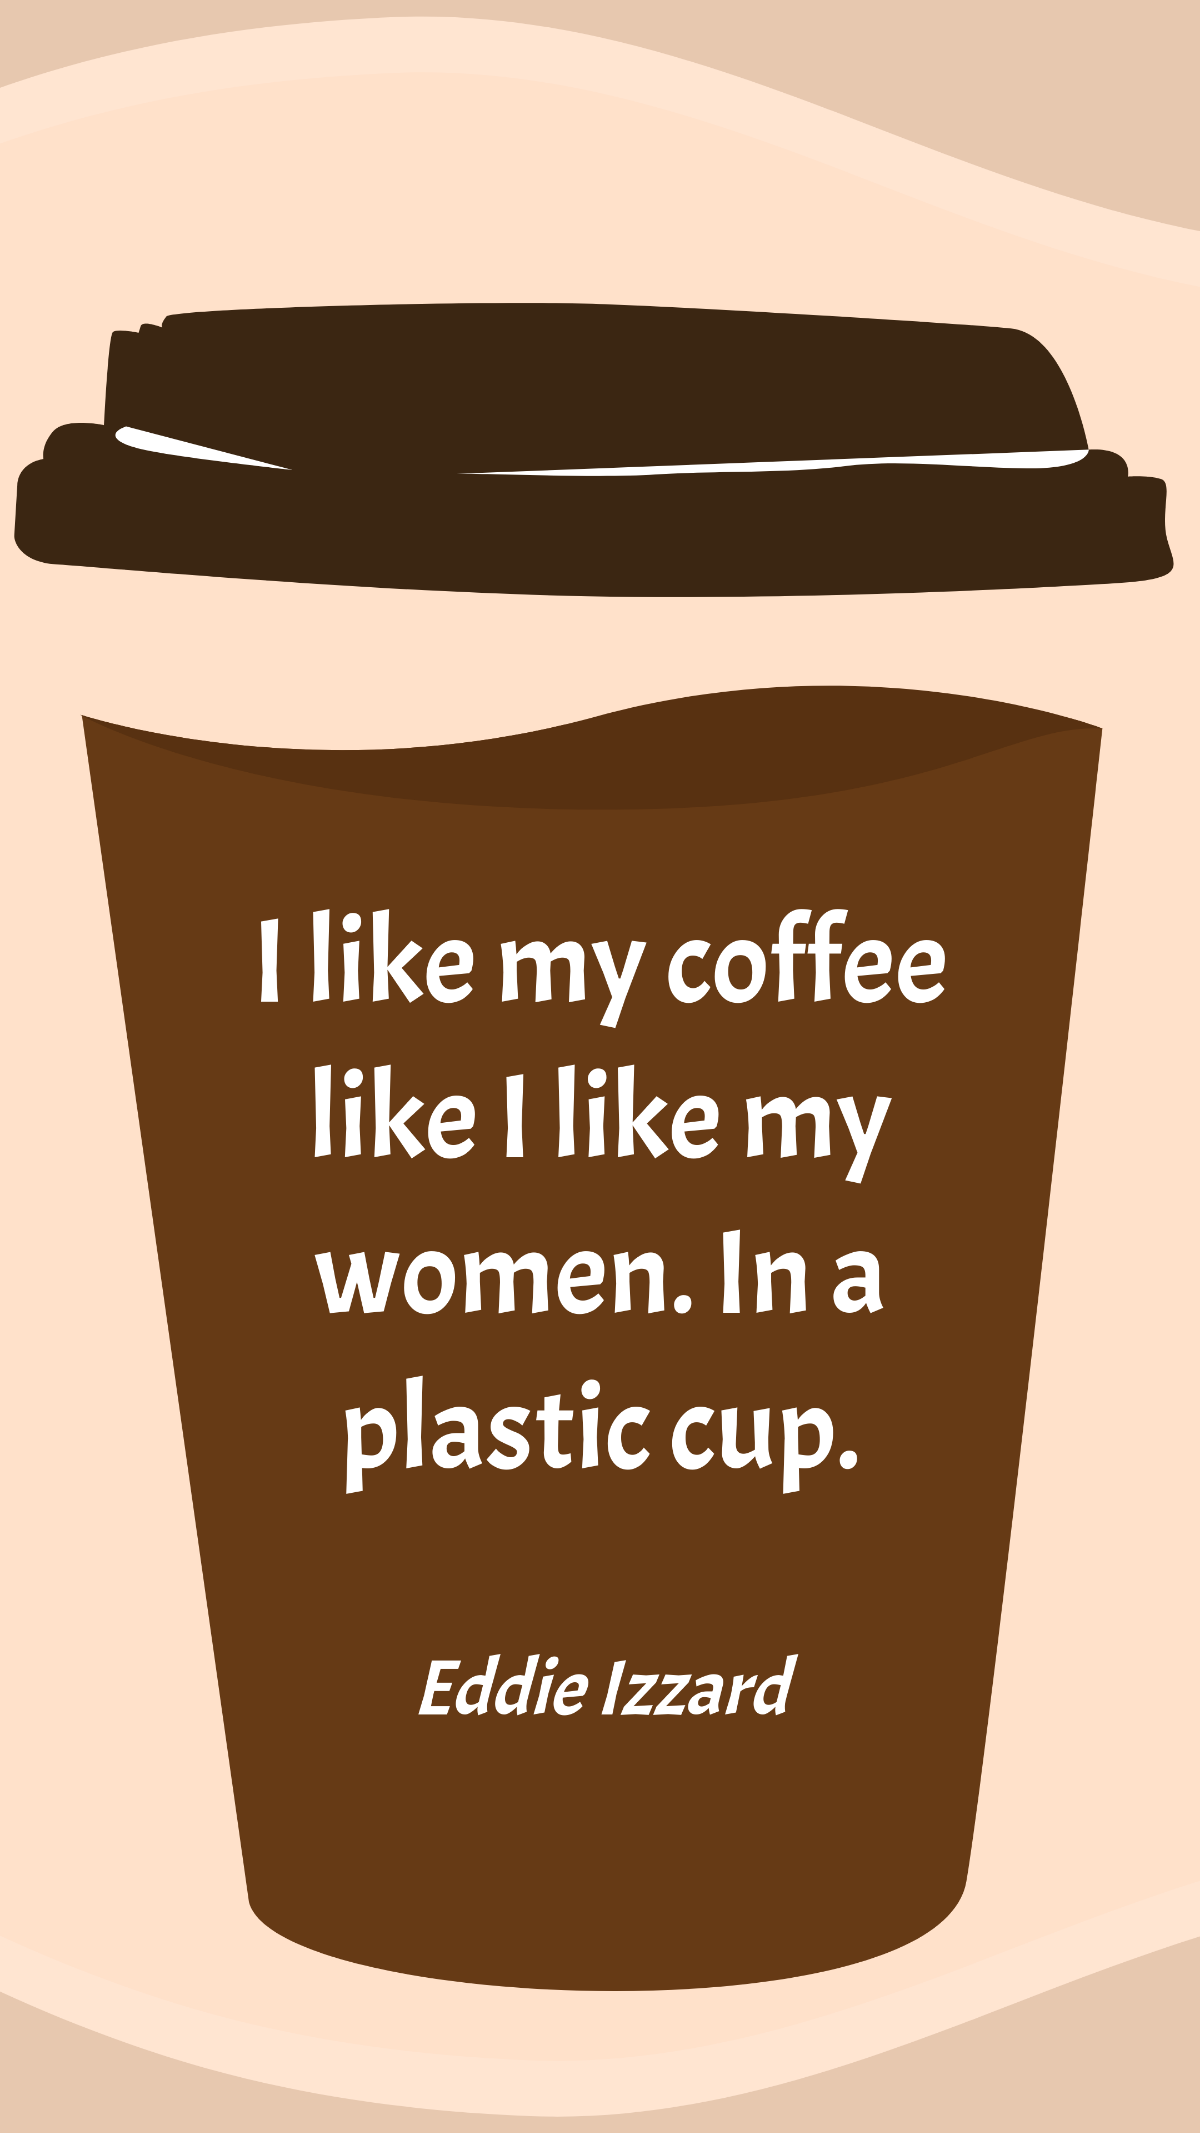 Eddie Izzard - I like my coffee like I like my women. In a plastic cup. Template